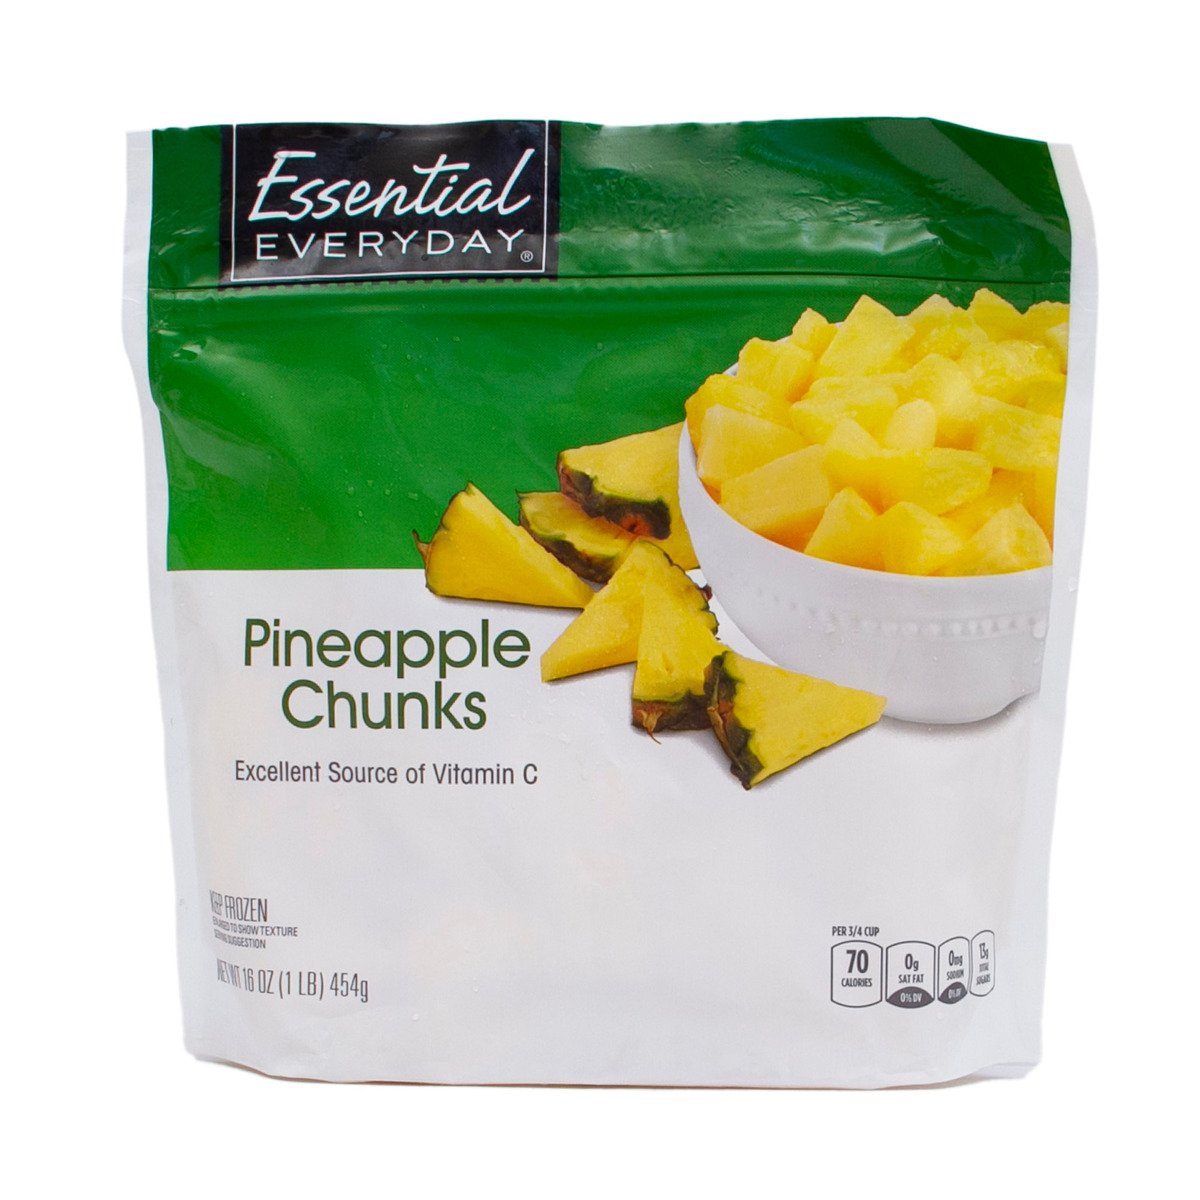 Essential Everyday Pineapple Chunks 454g